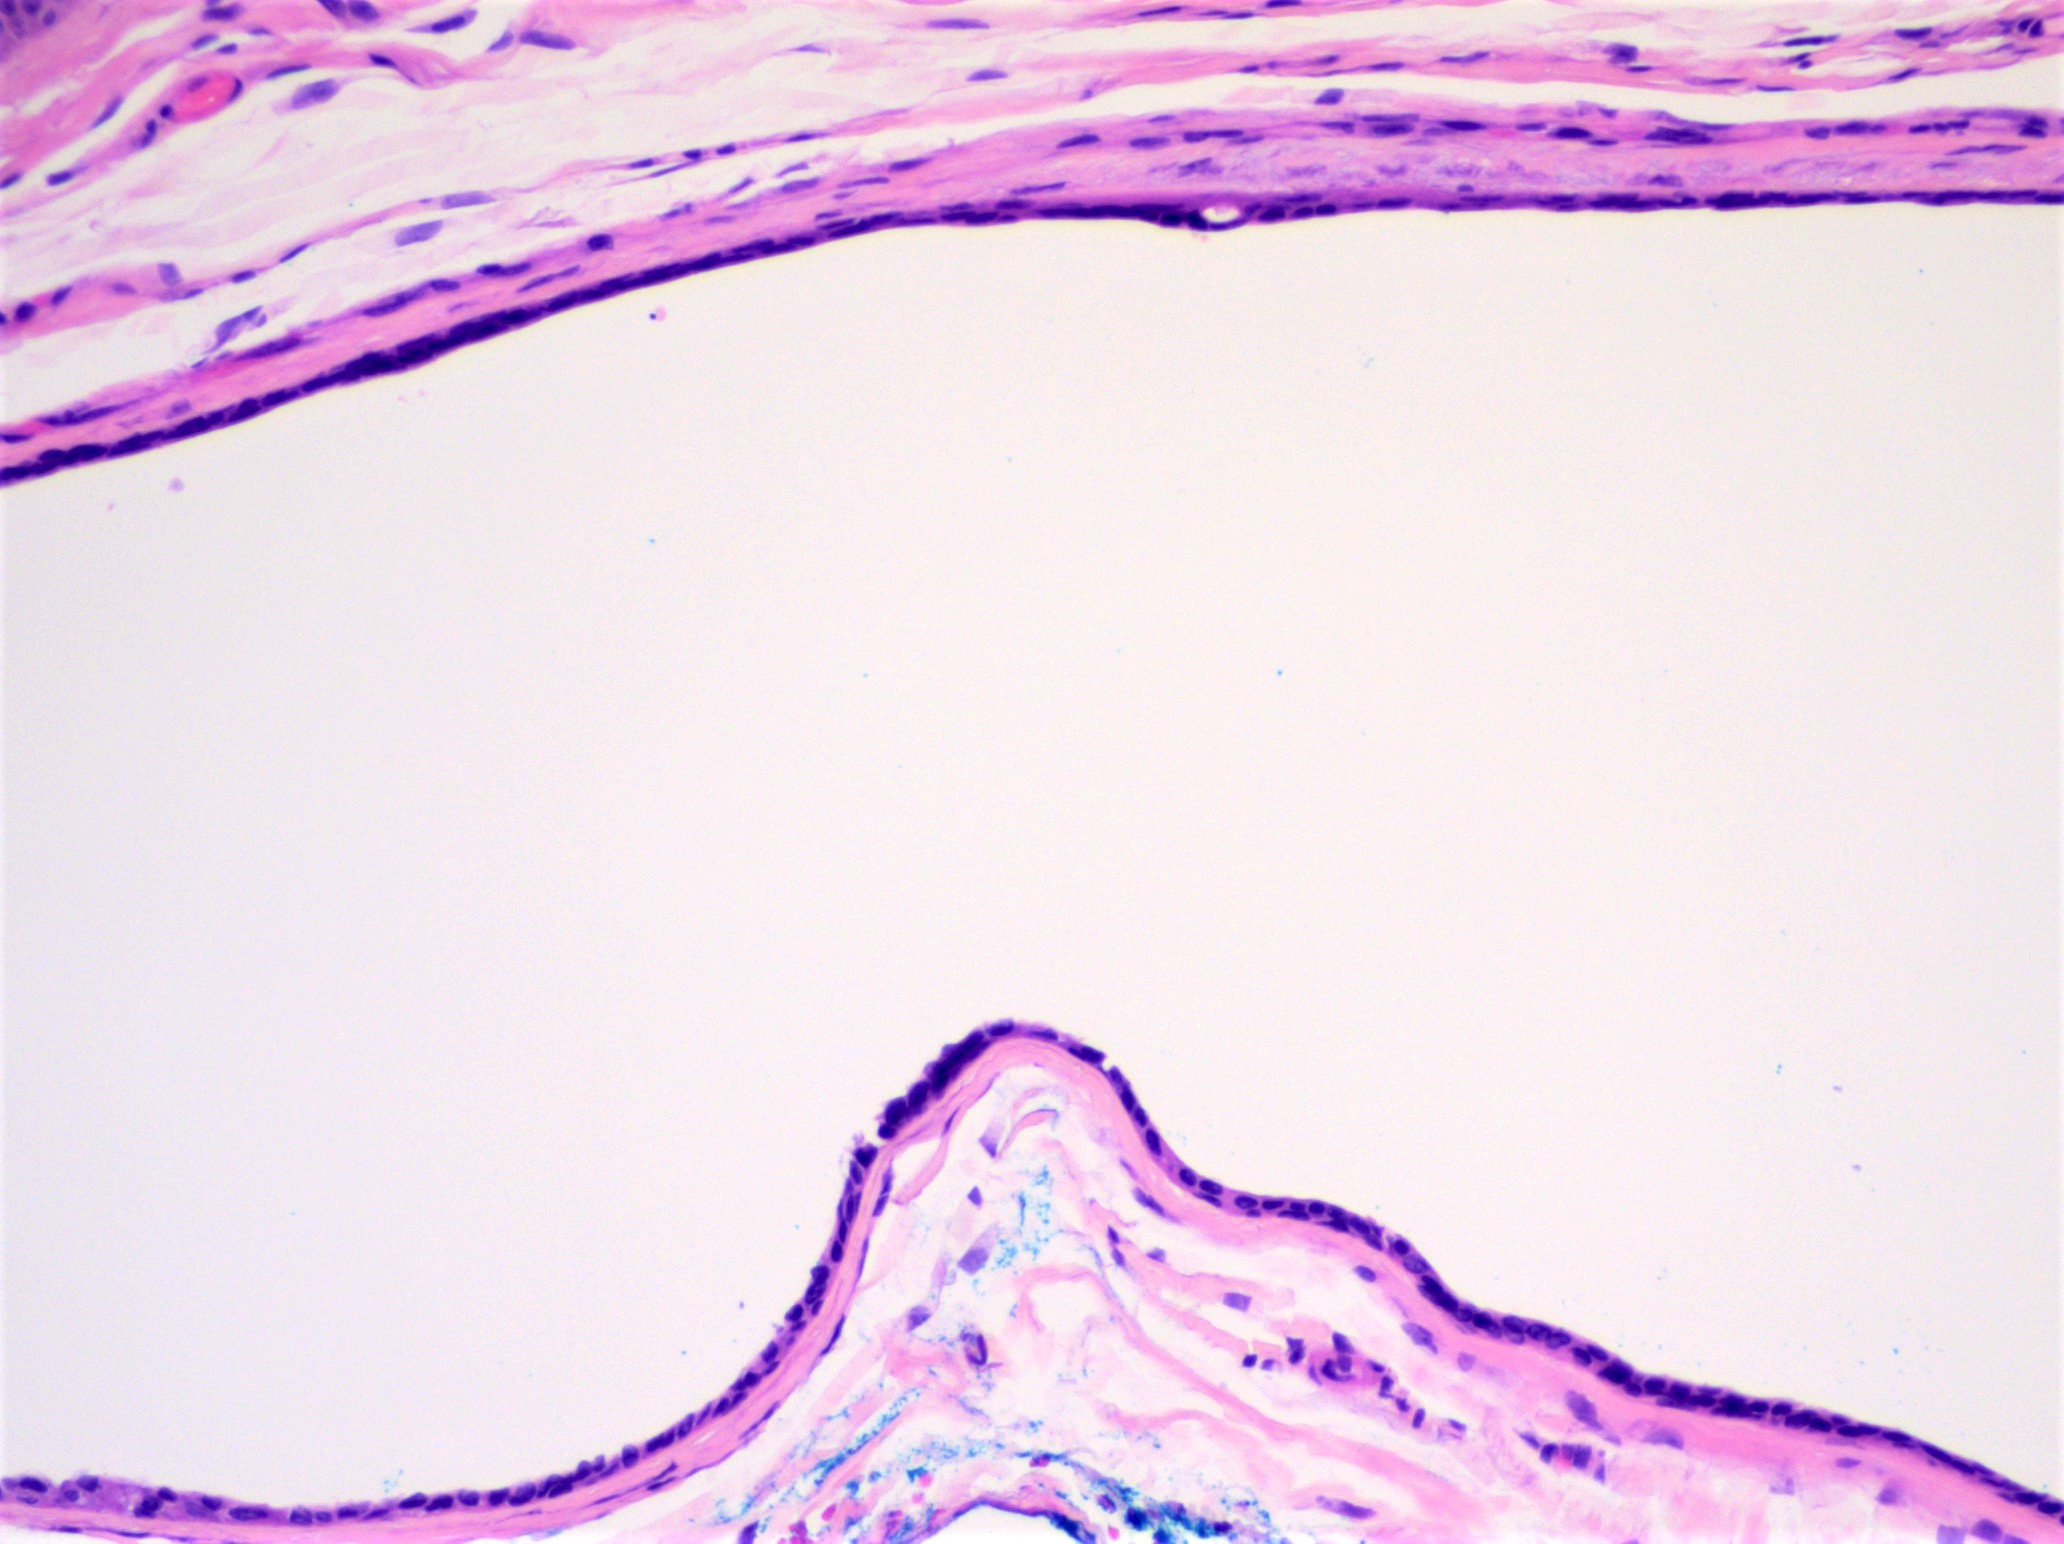 Eccrine hidrocystoma, attenuated lining